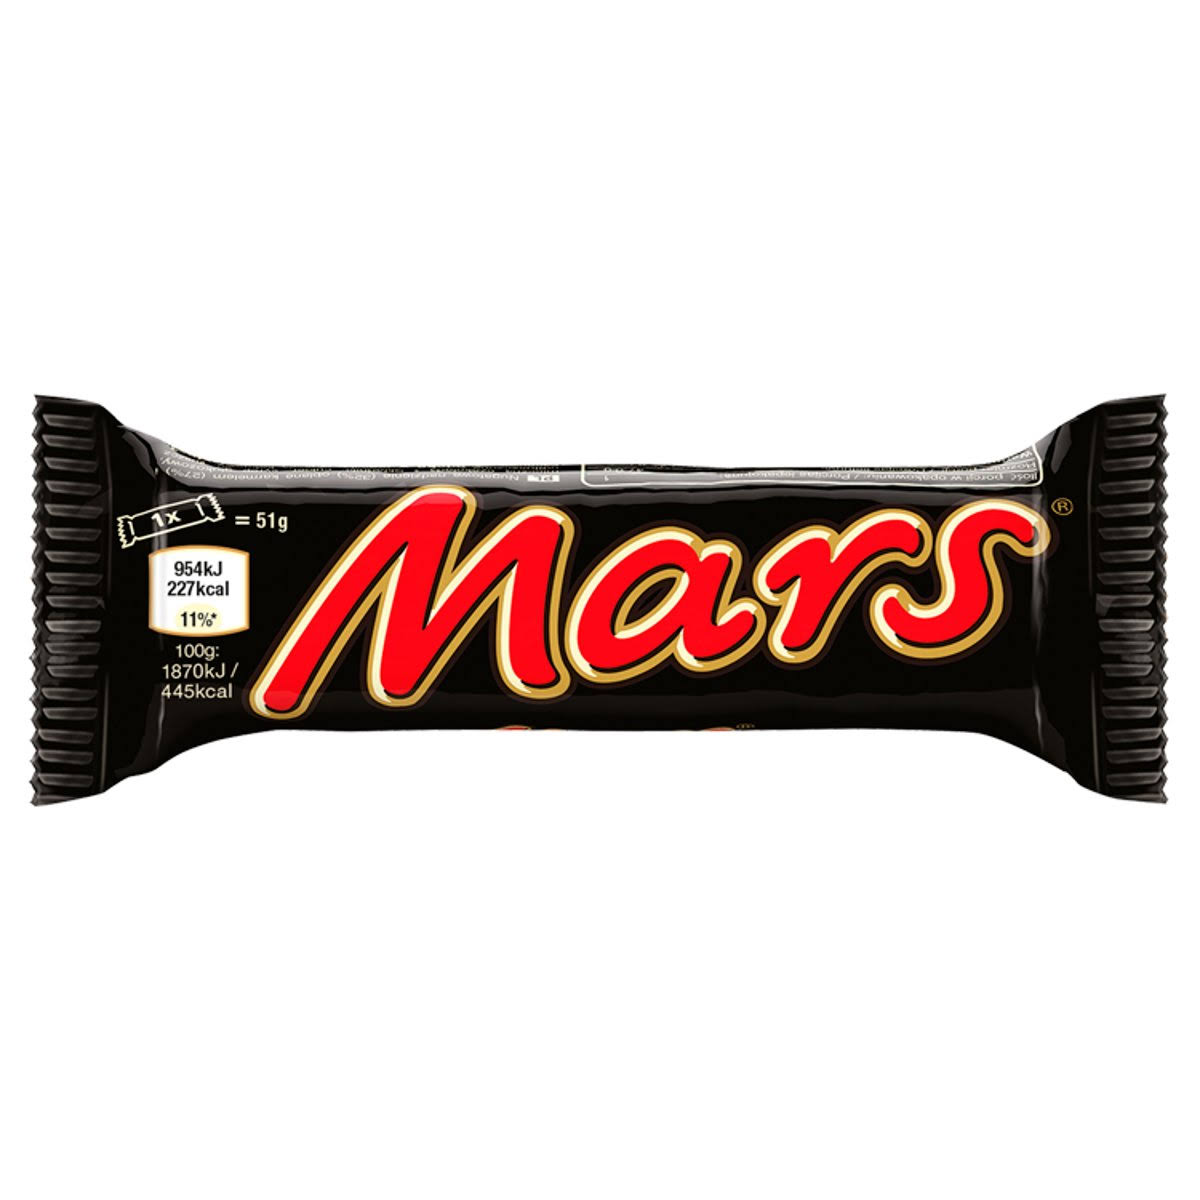 Mars Chocolate Bar - 51g